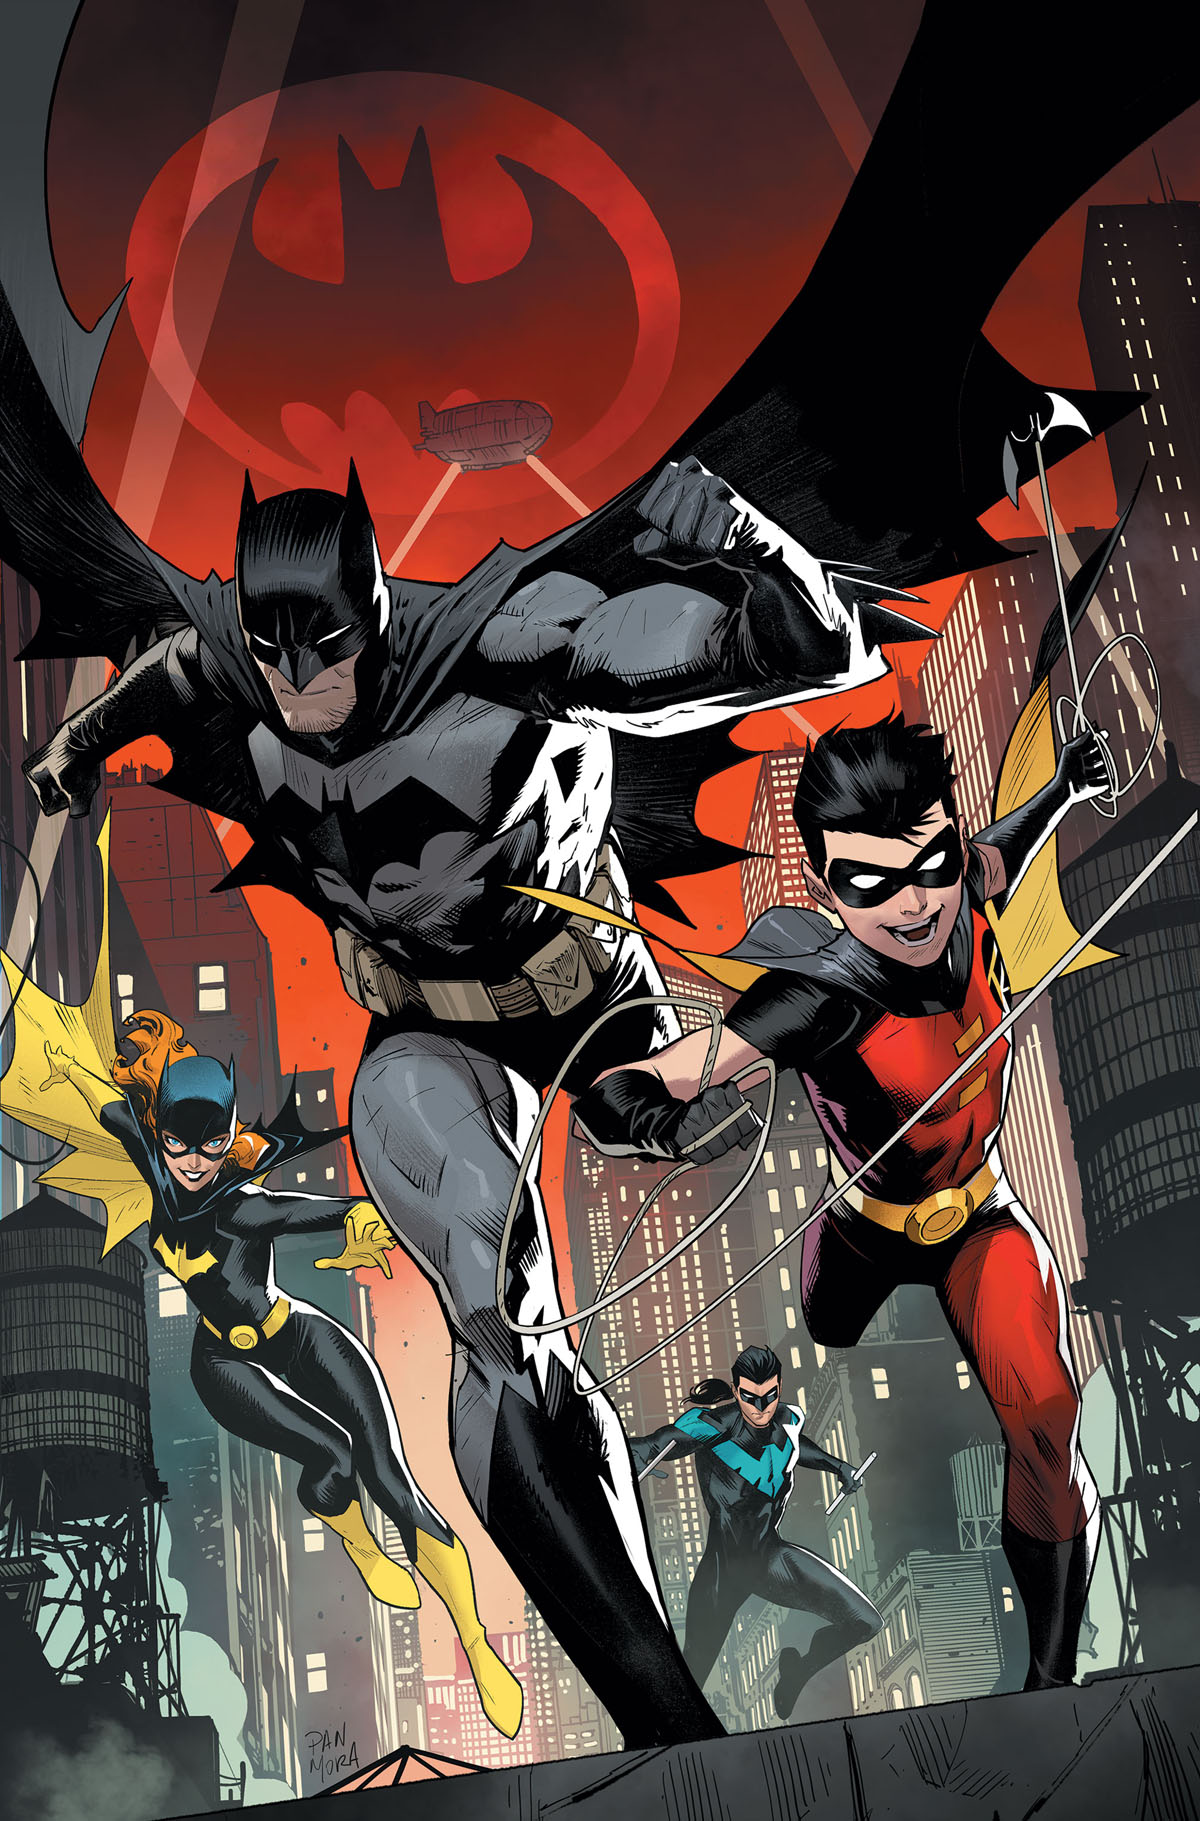 Batman: The Adventures Continue #1 cover by Dan Mora